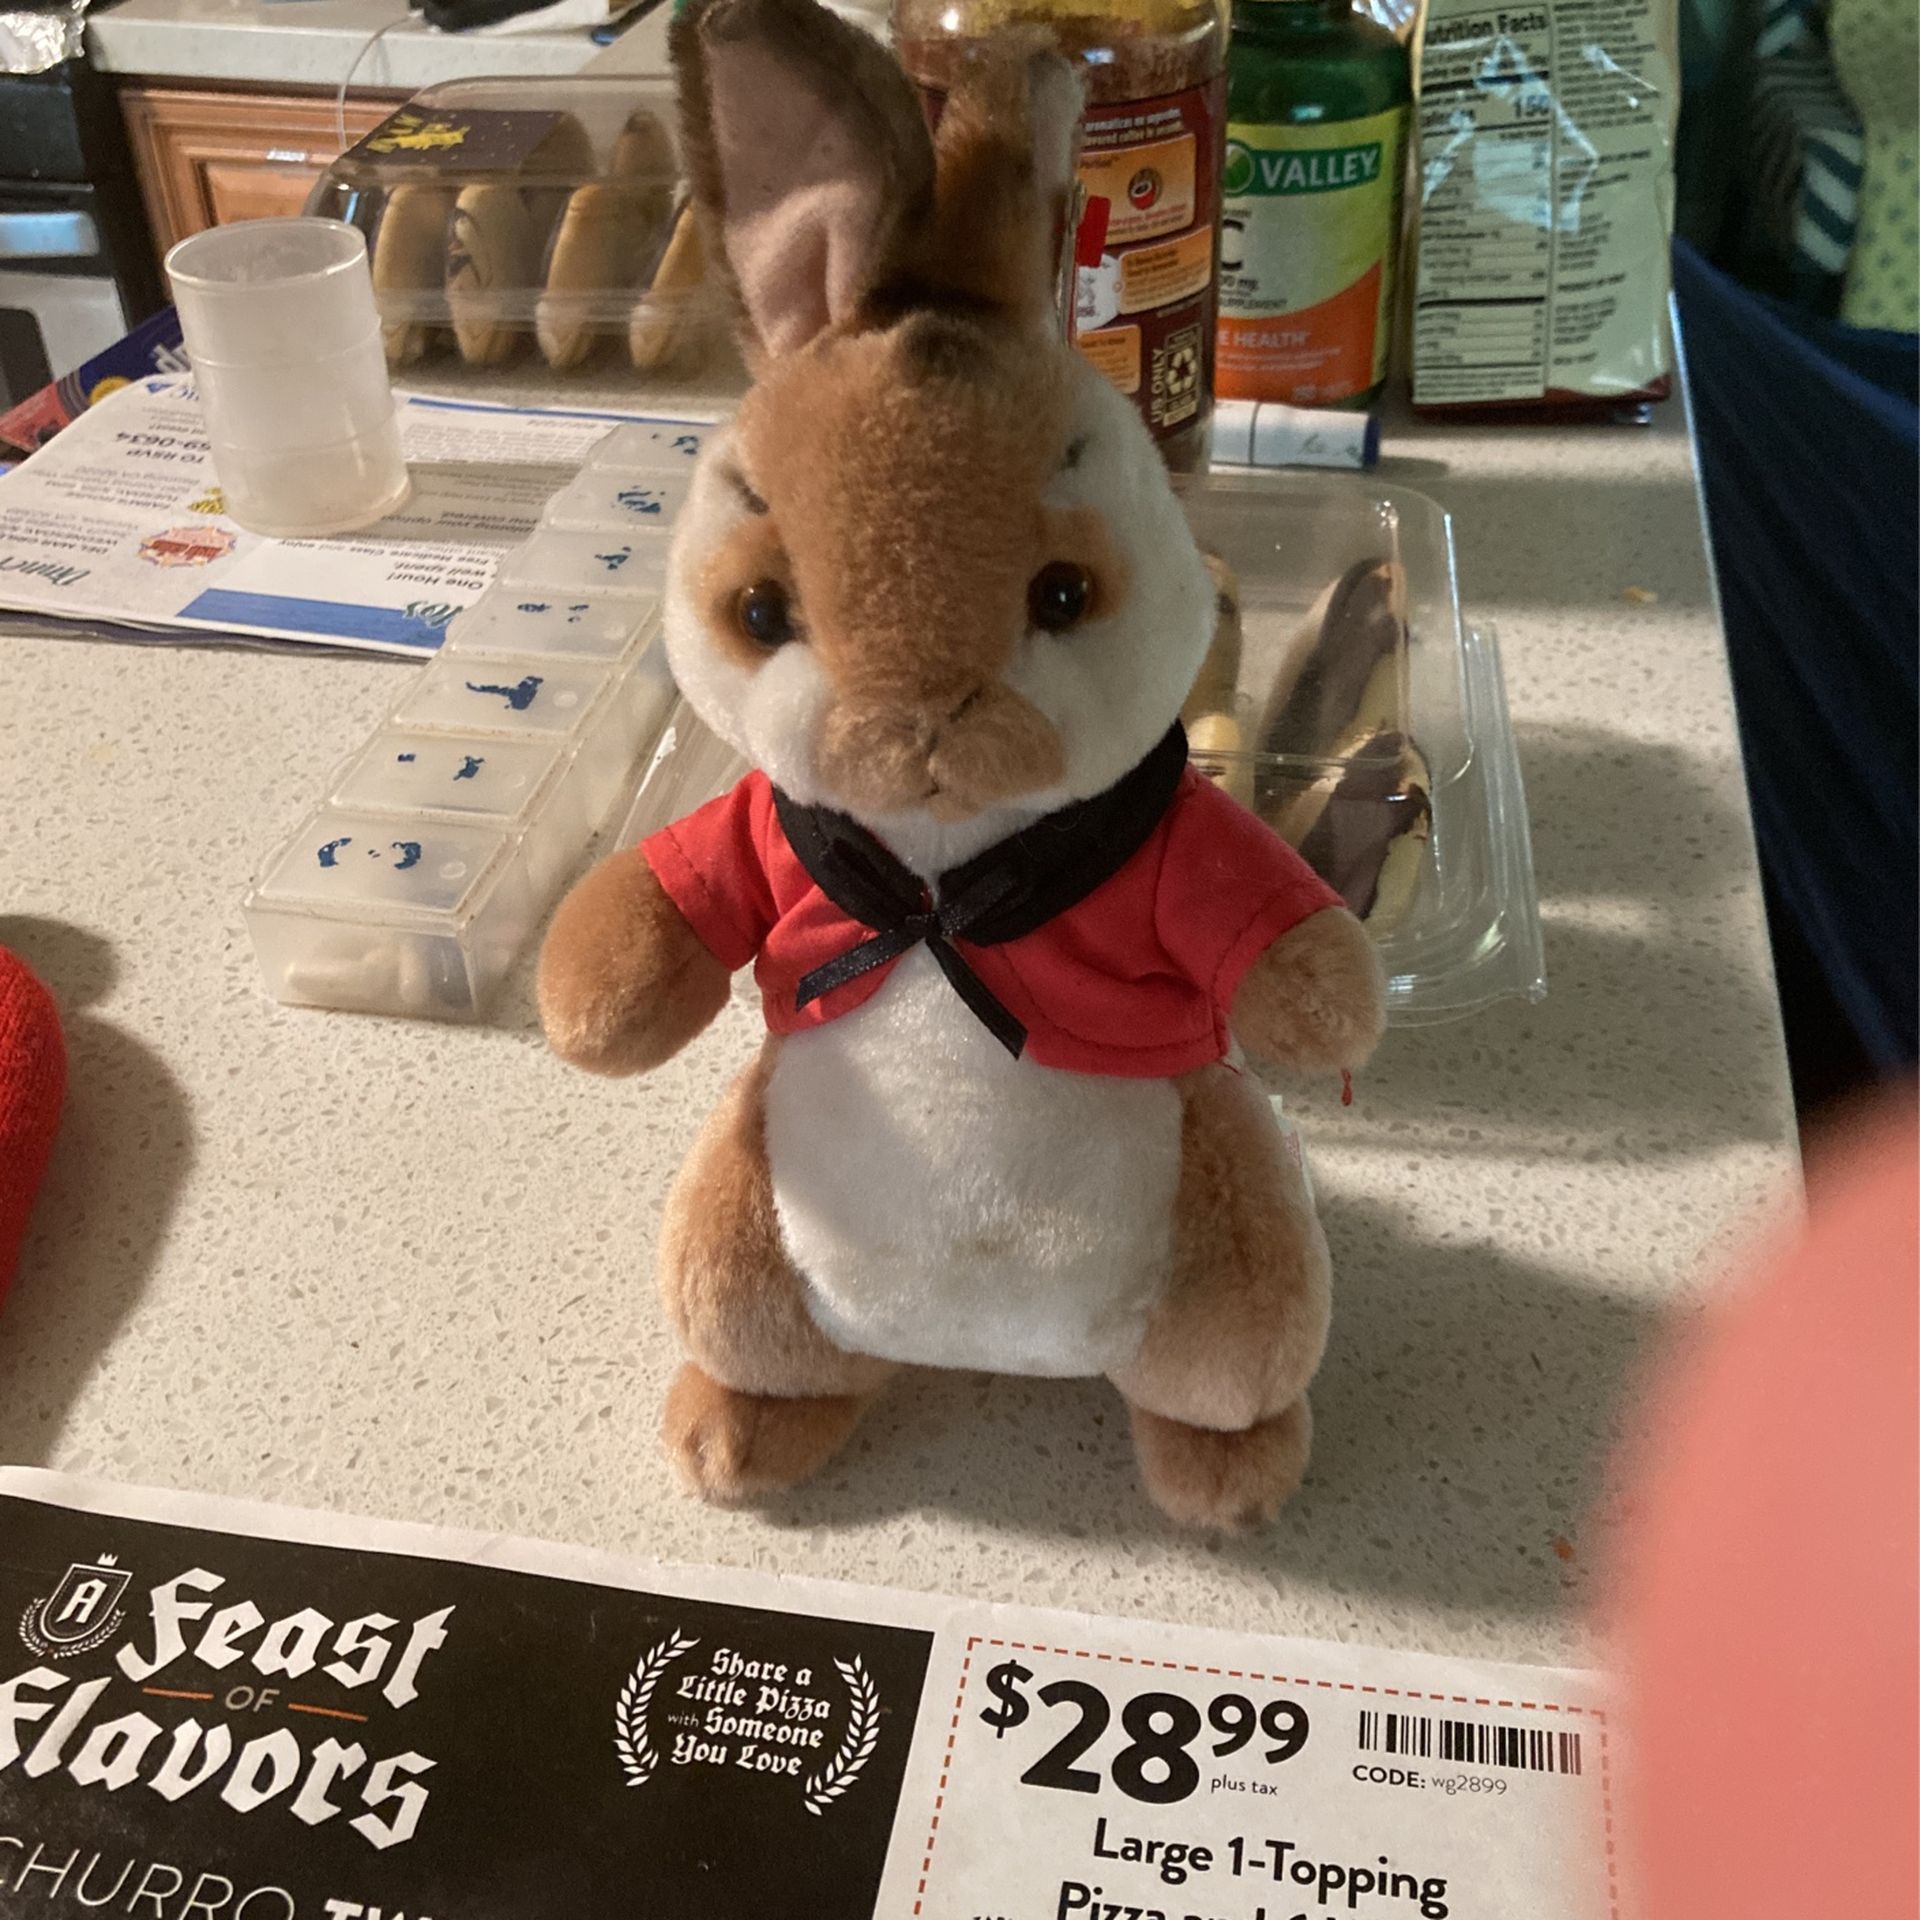 Peter rabbit toy